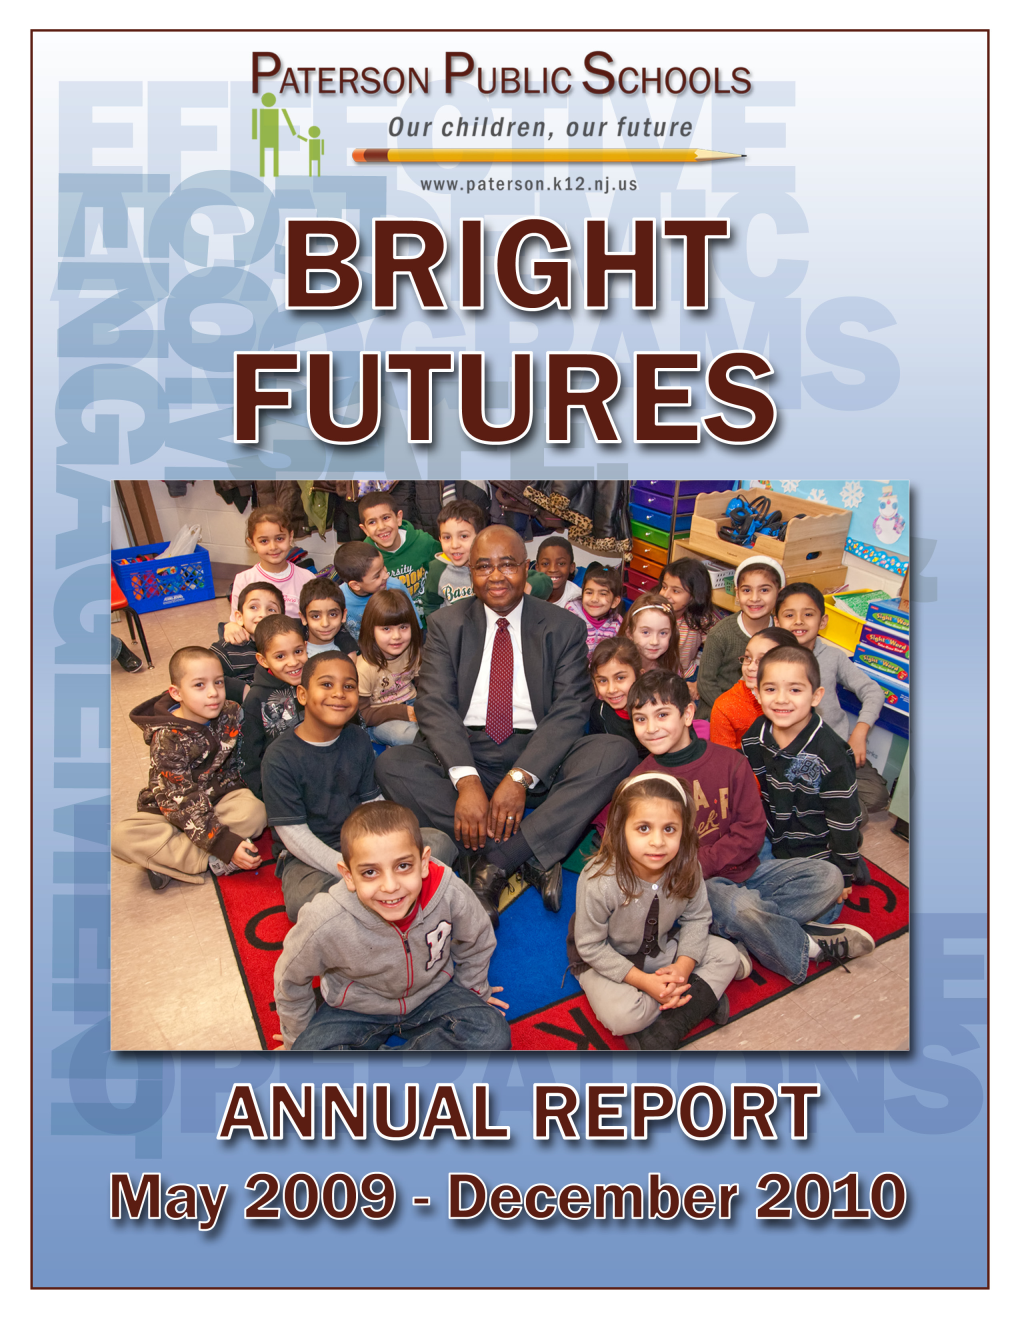 Annual Report: 2009-2010